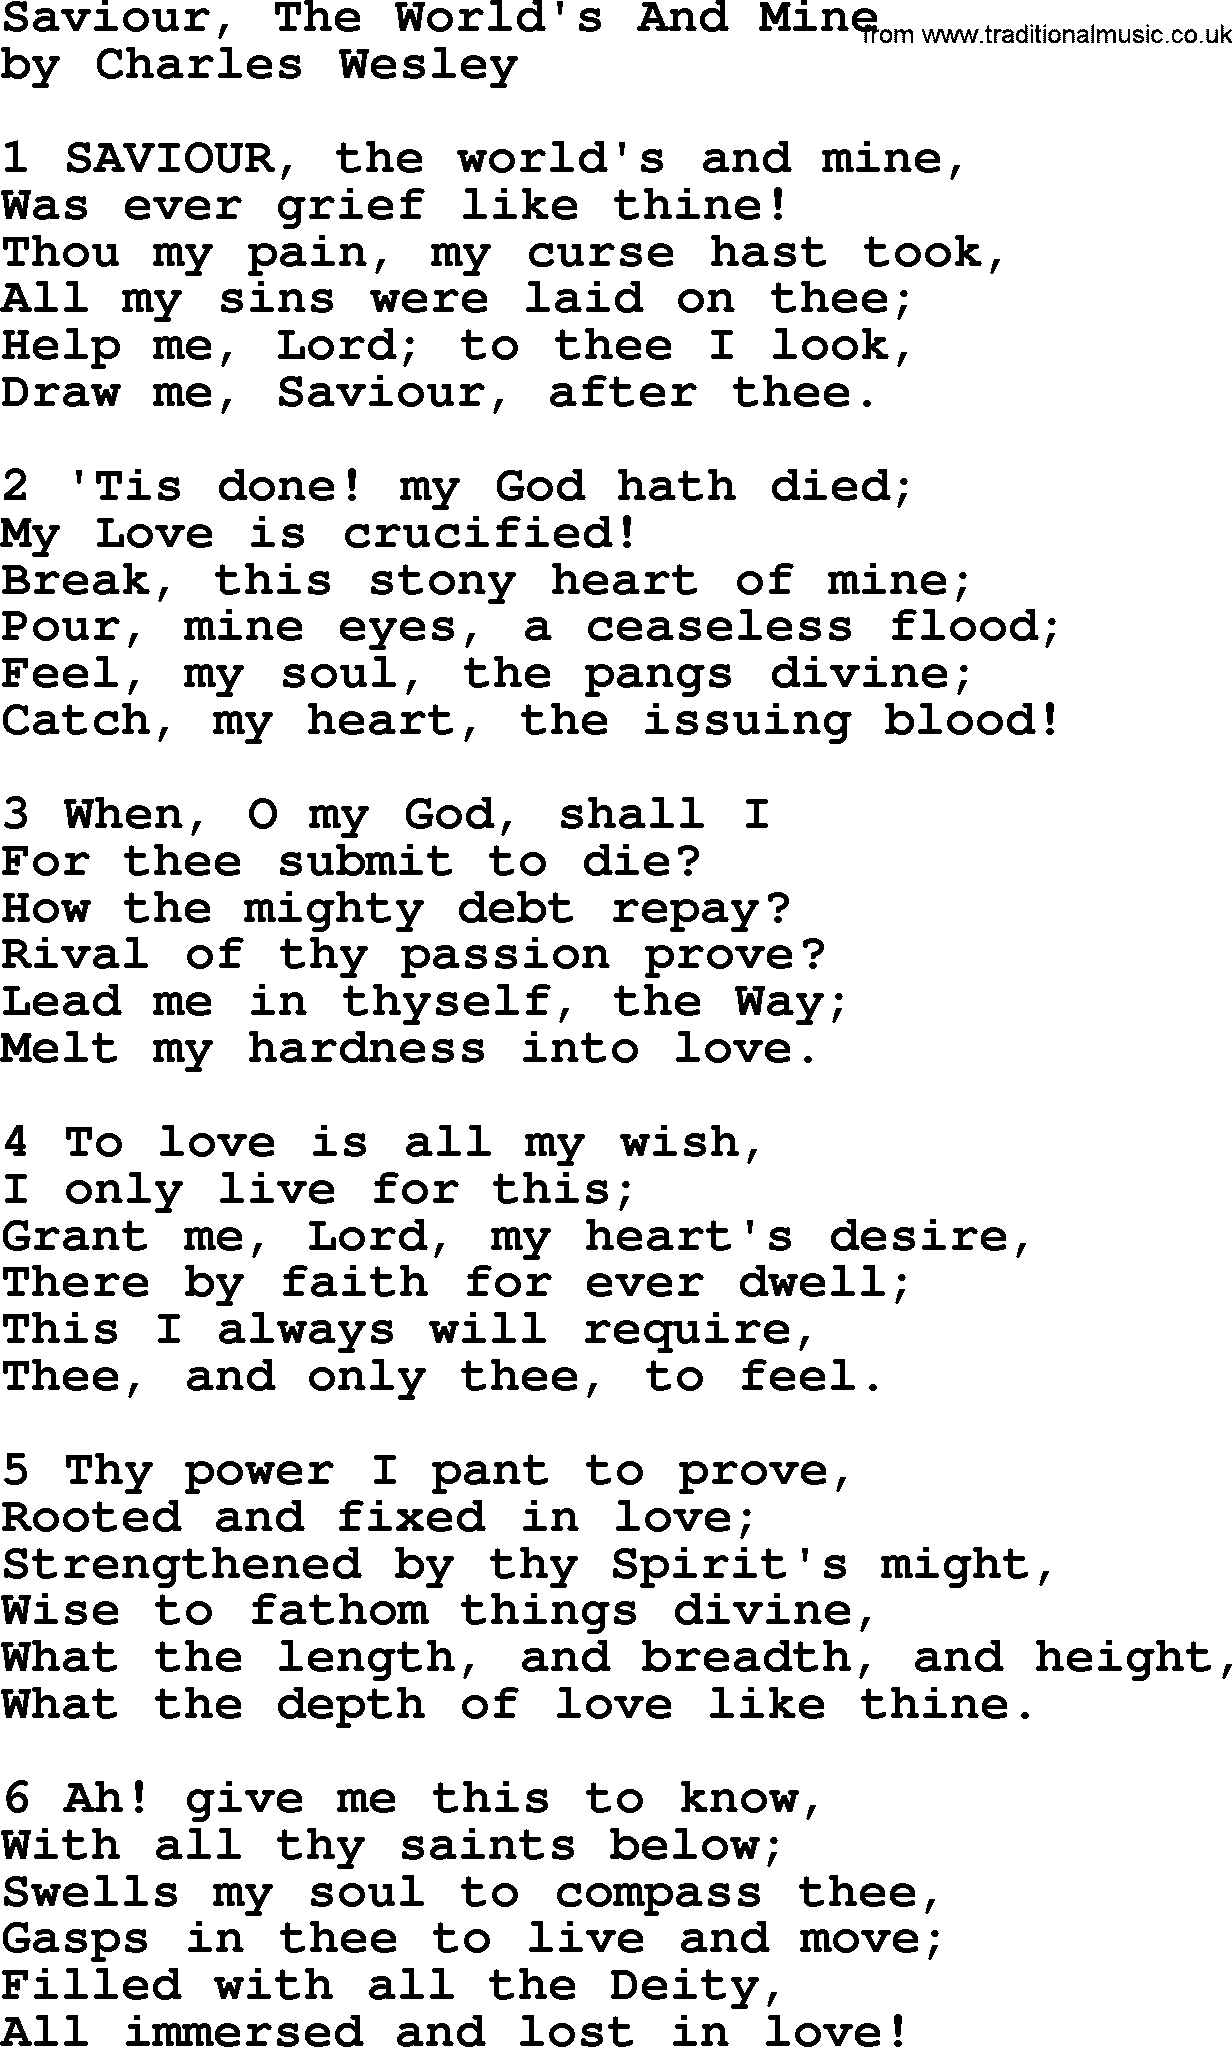 Charles Wesley hymn: Saviour, The World's And Mine, lyrics